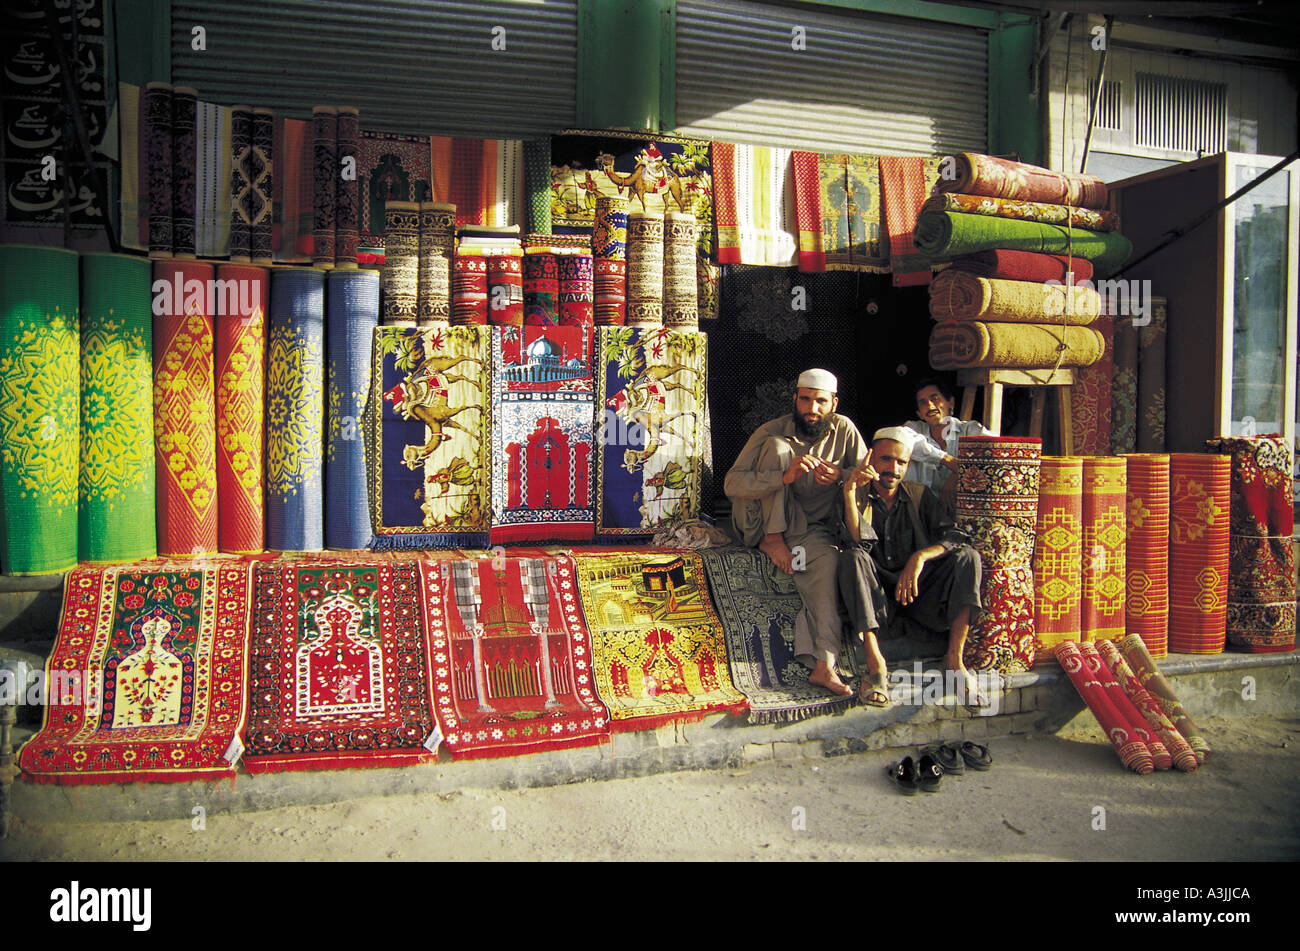 carpet shop city of peshawar pakistan editorial use only Stock Photo